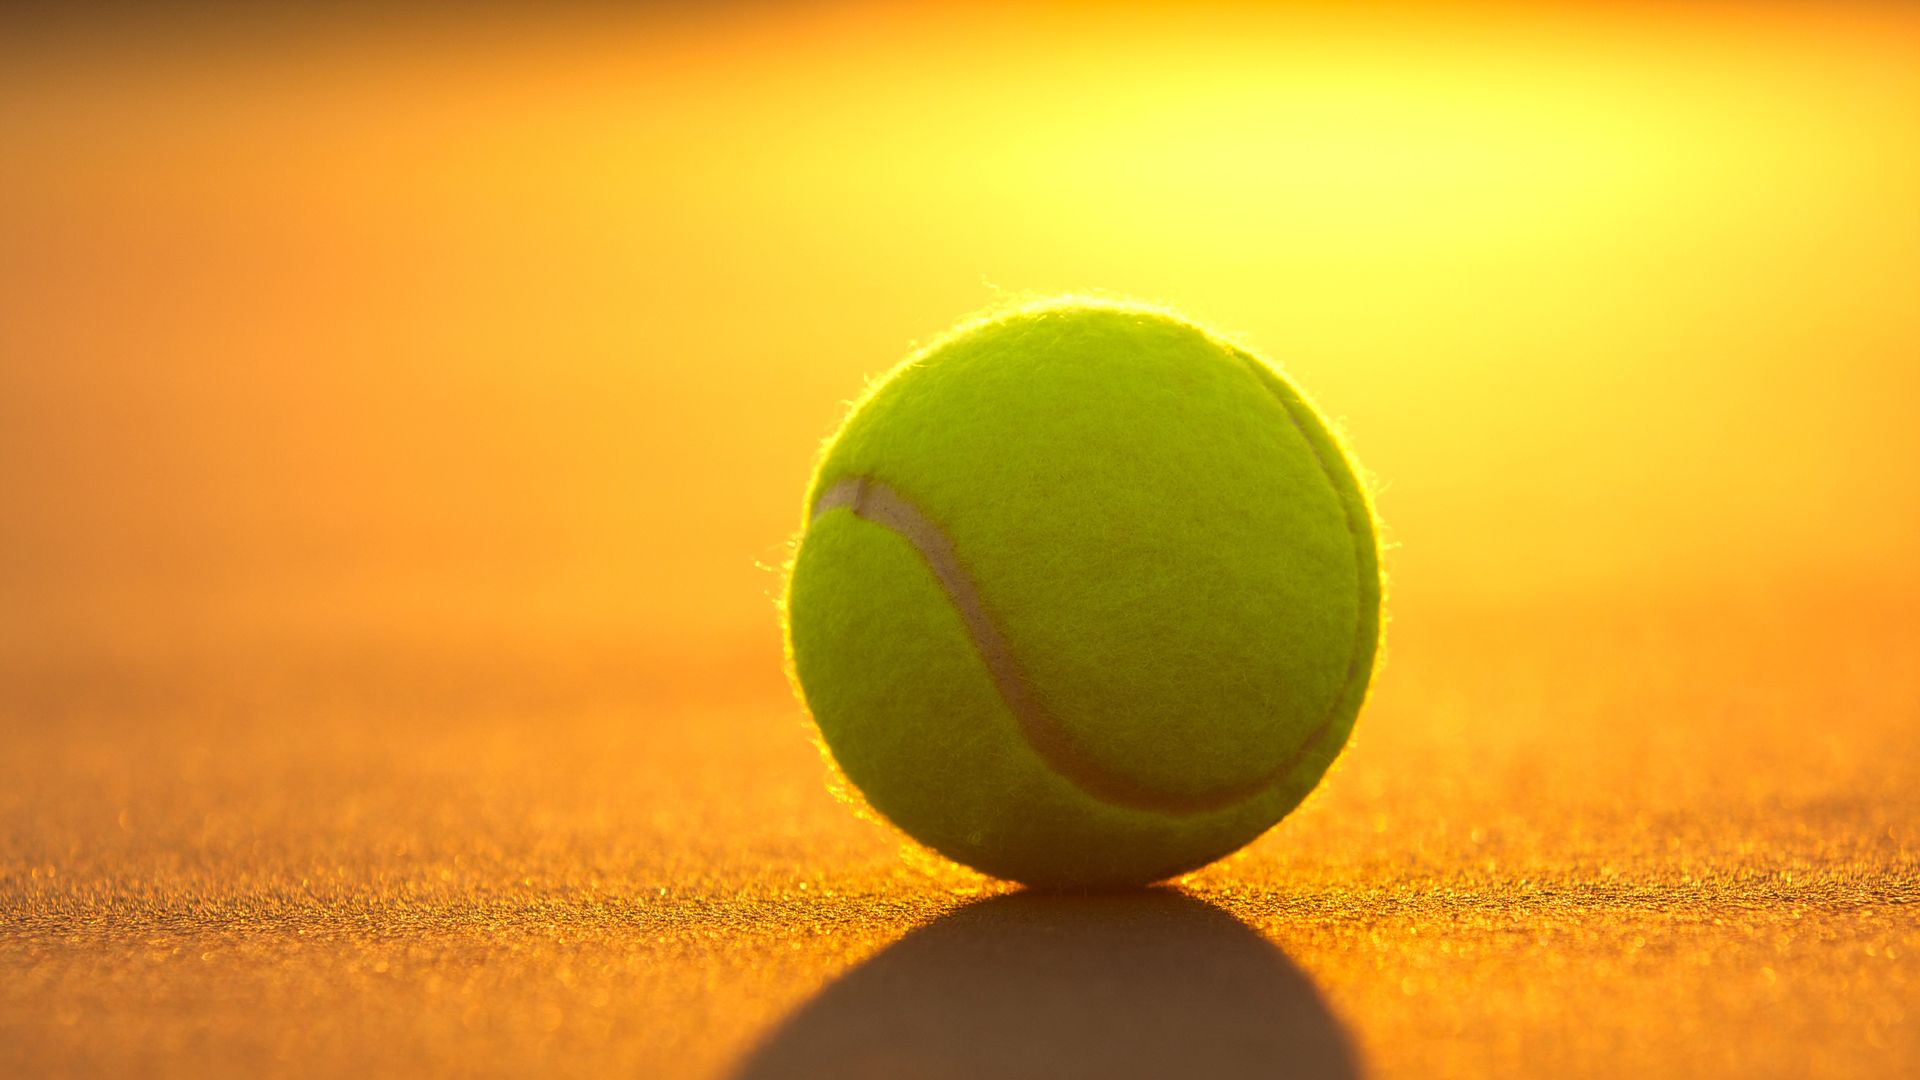 Tennis ball on the court - Tennis